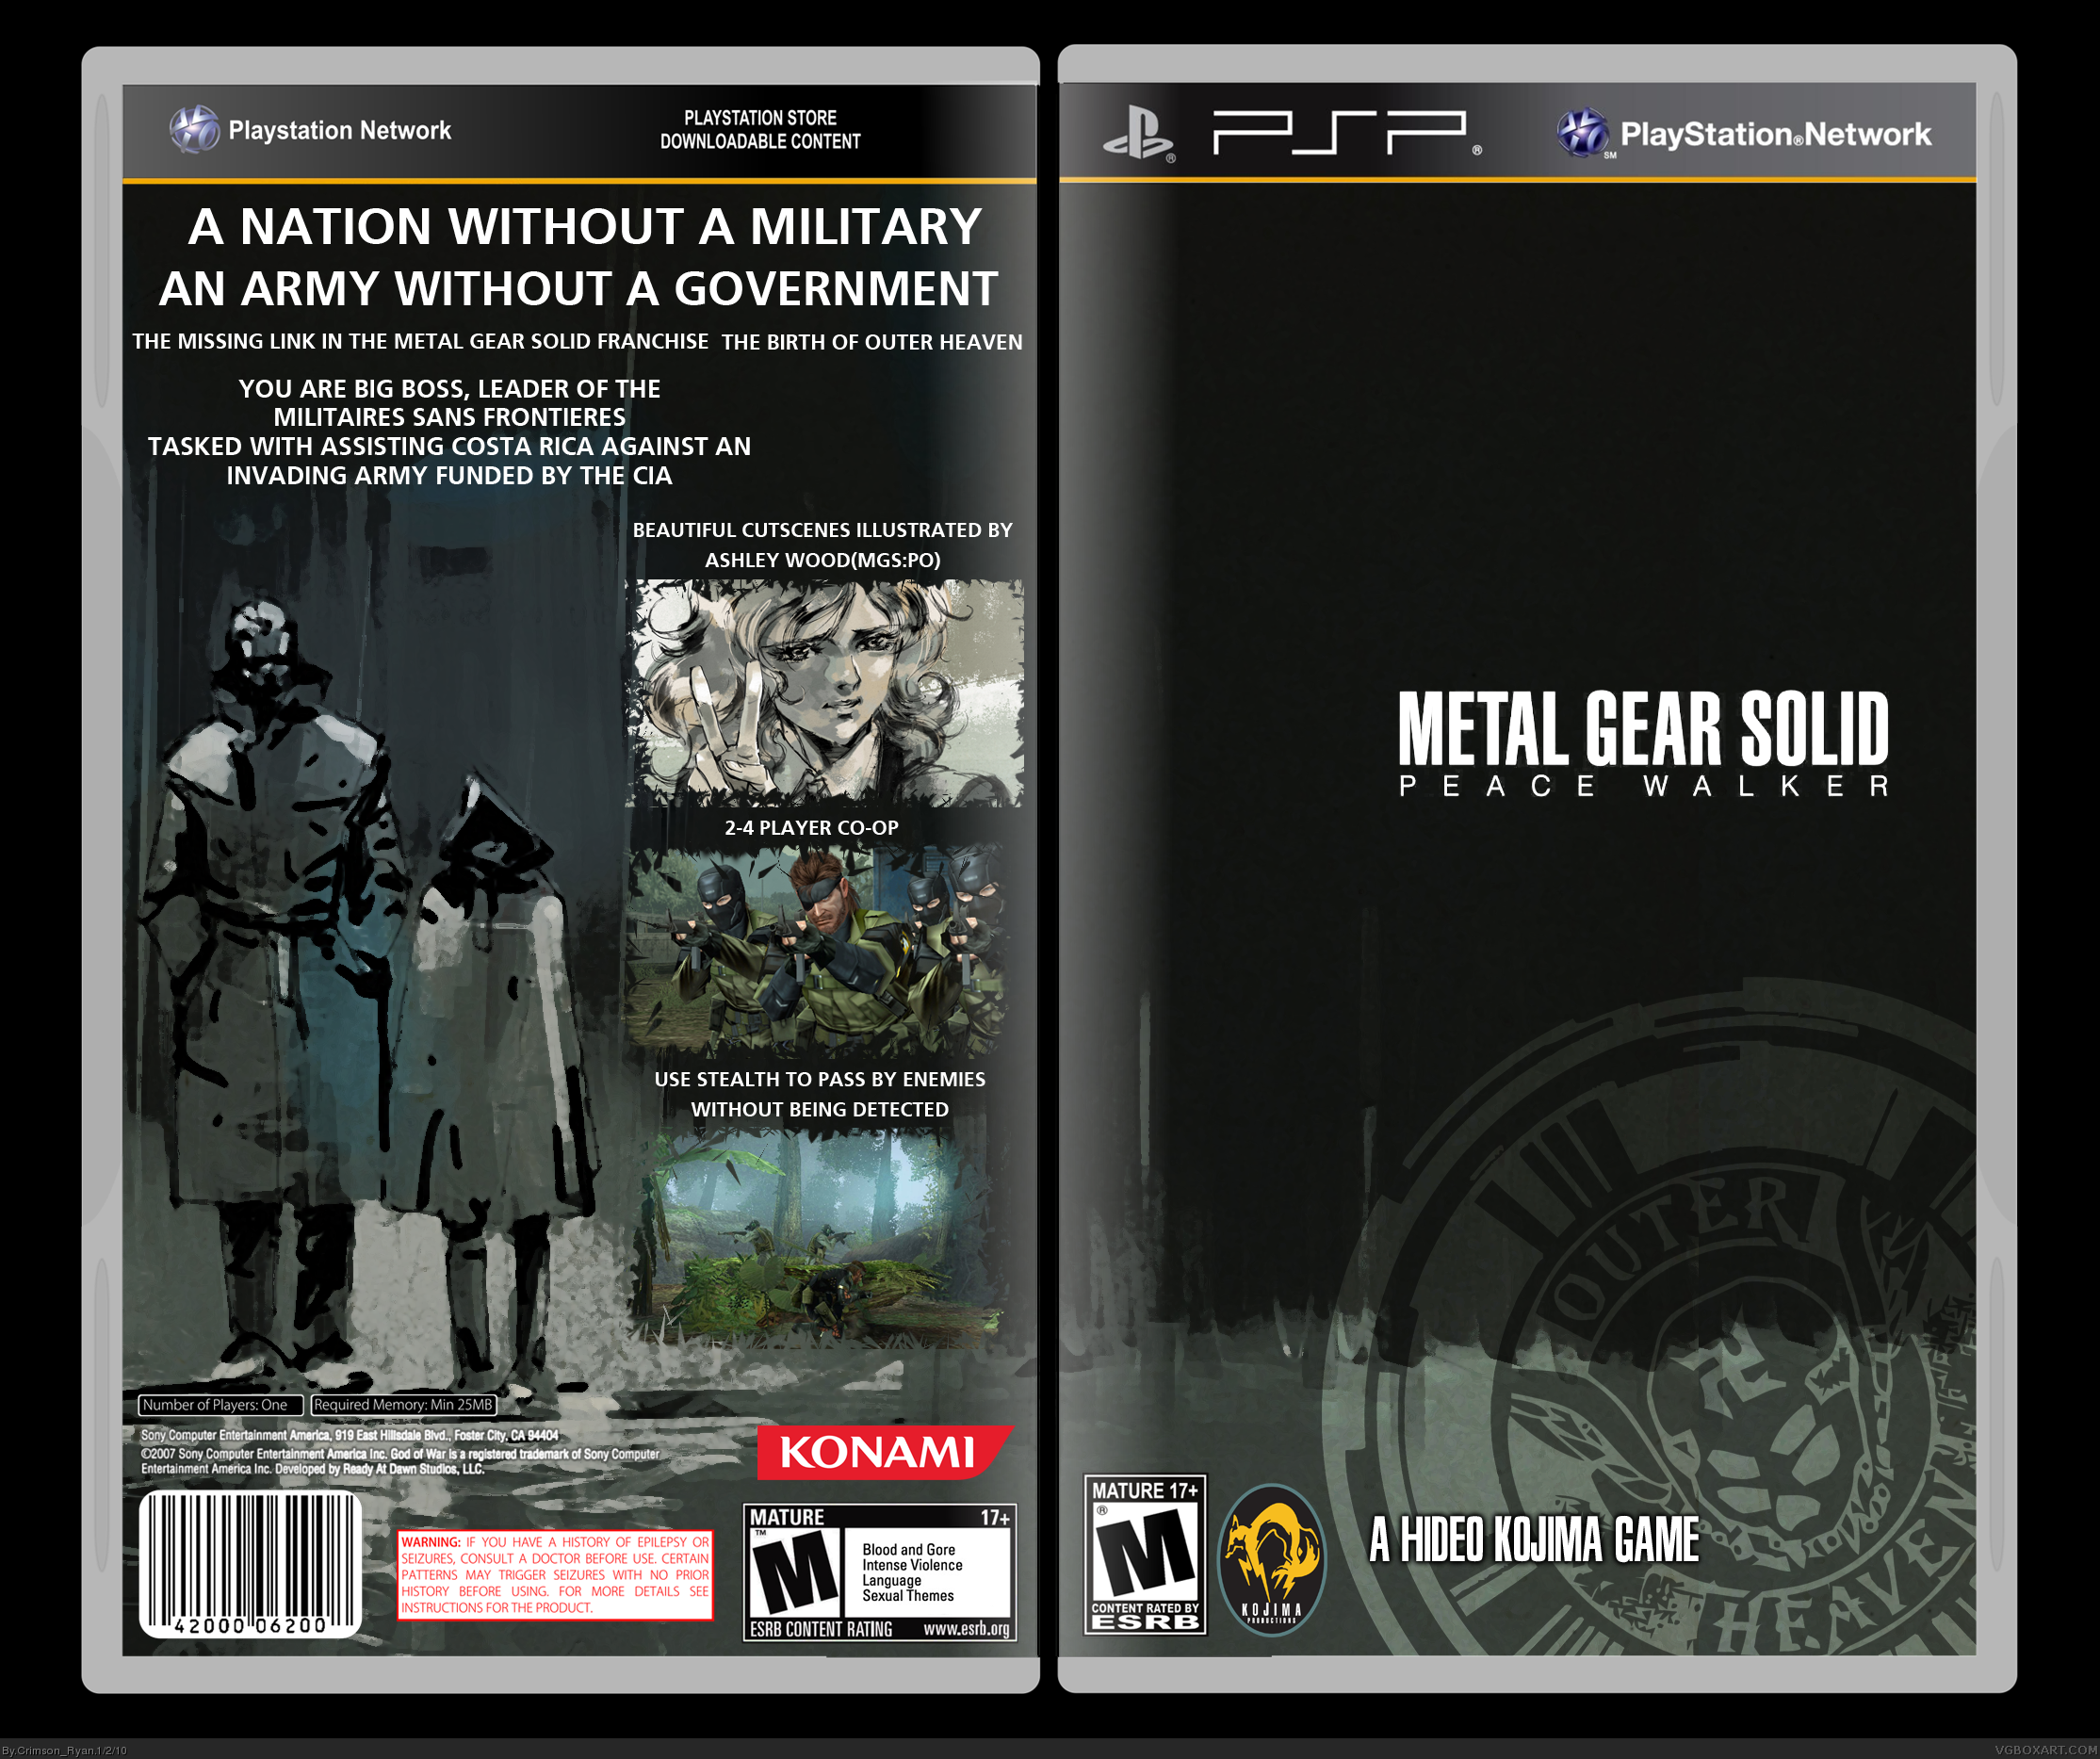 Metal Gear Solid: Peace Walker box cover